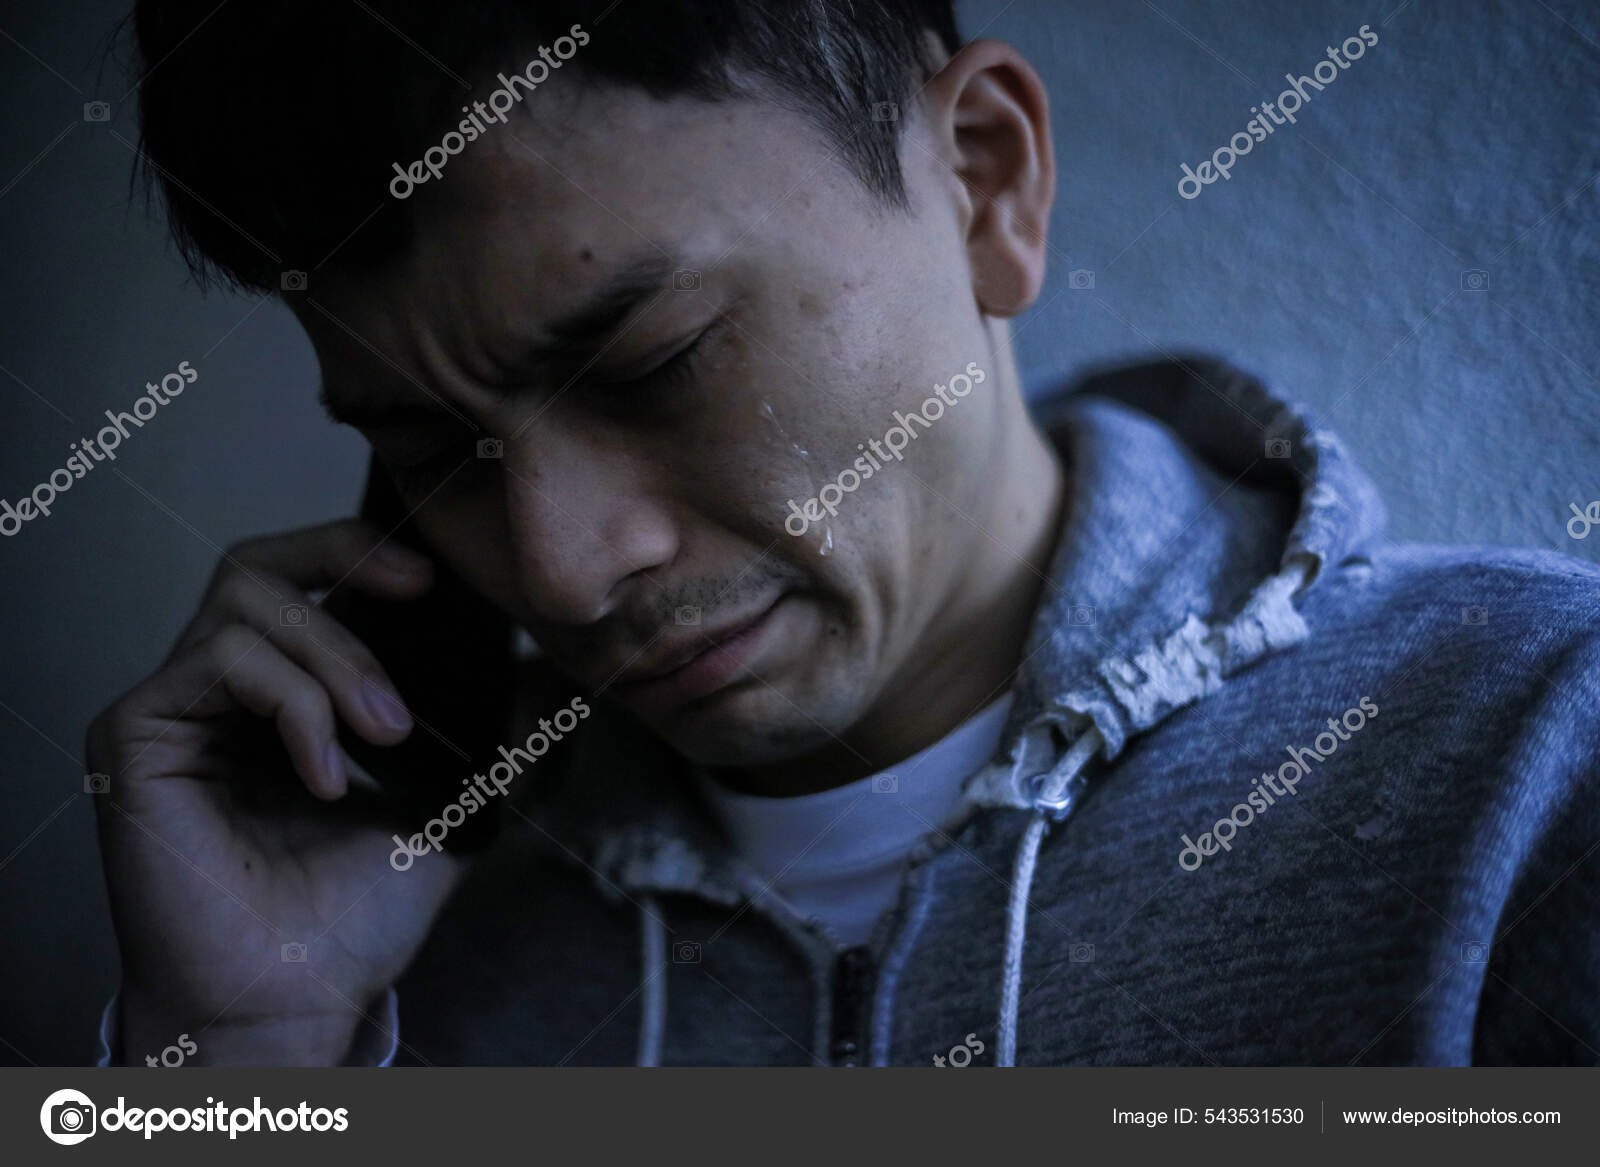 depositphotos_543531530-stock-photo-portrait-crying-lonely-asian-man.jpg